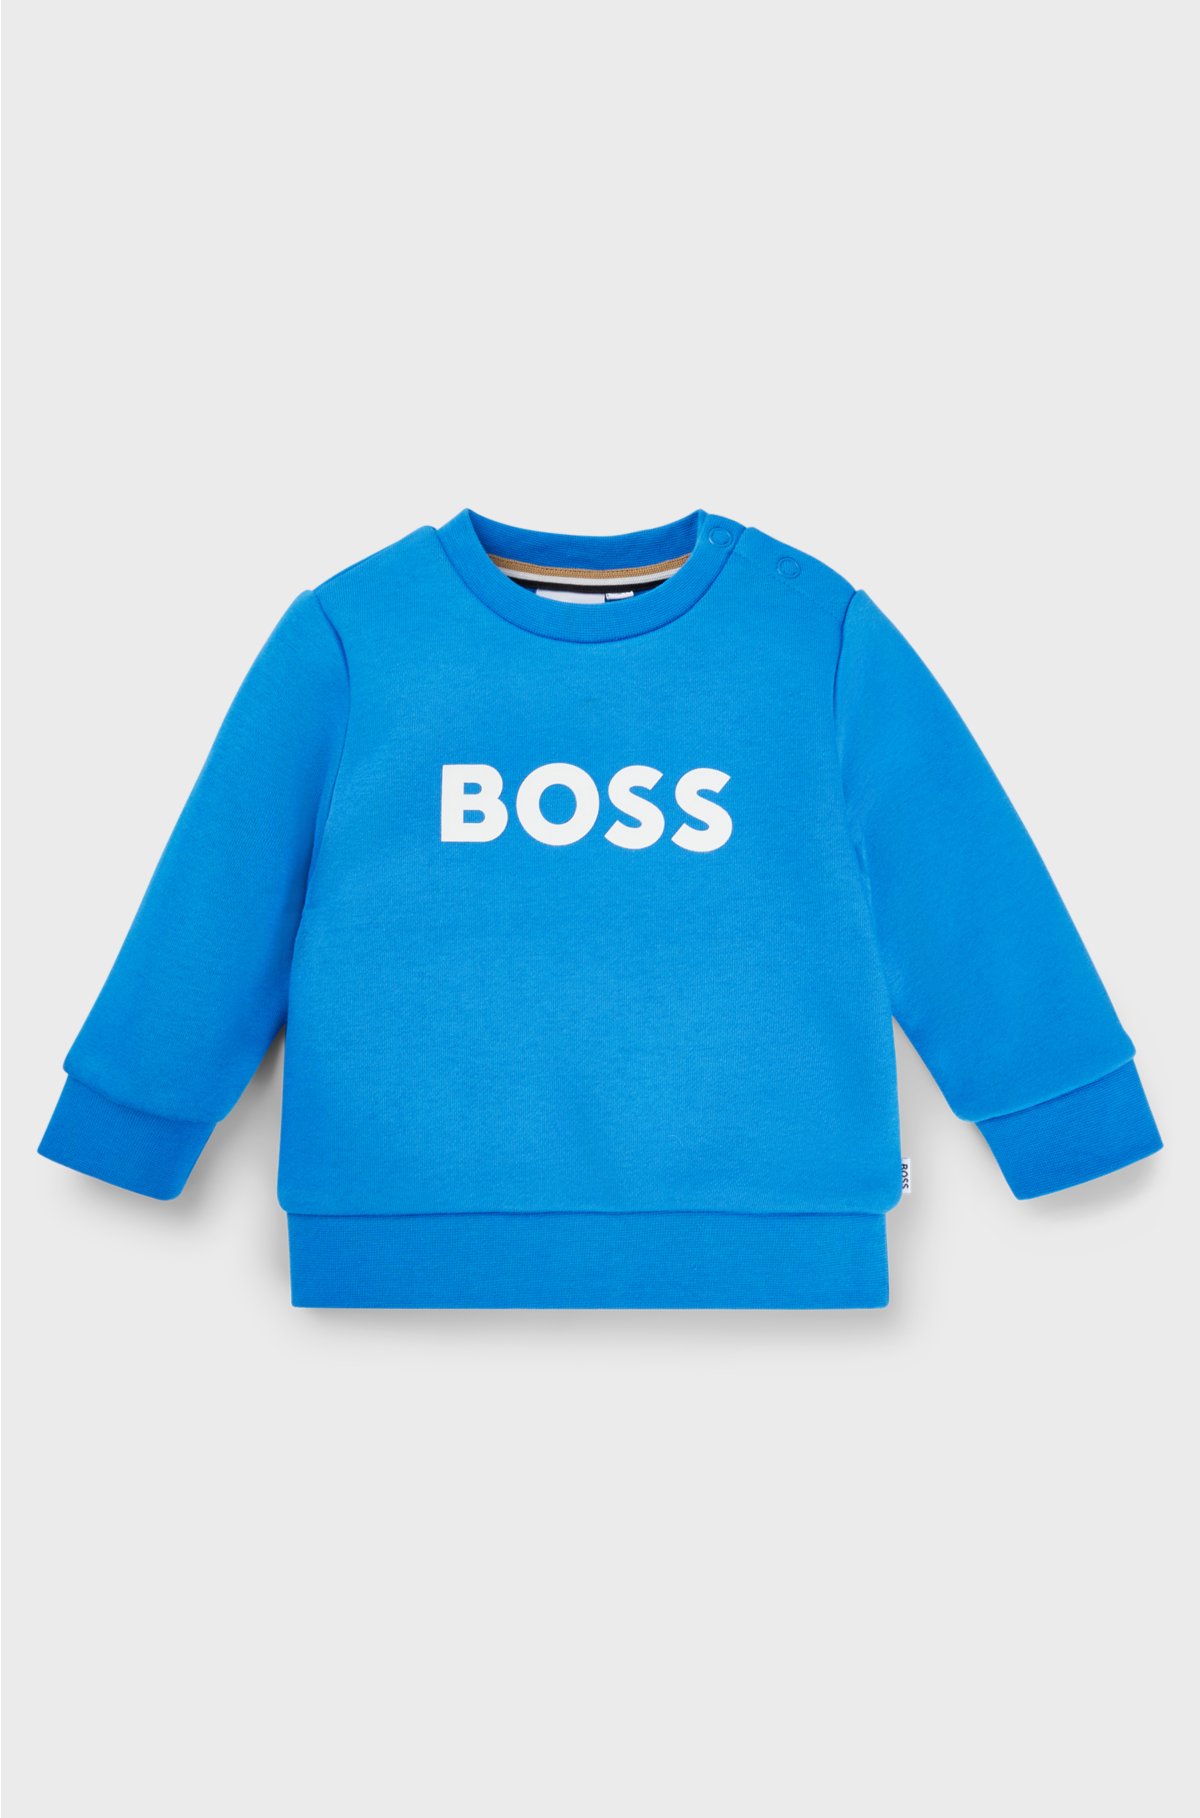 Kids' cotton-blend sweatshirt with logo print, Blue